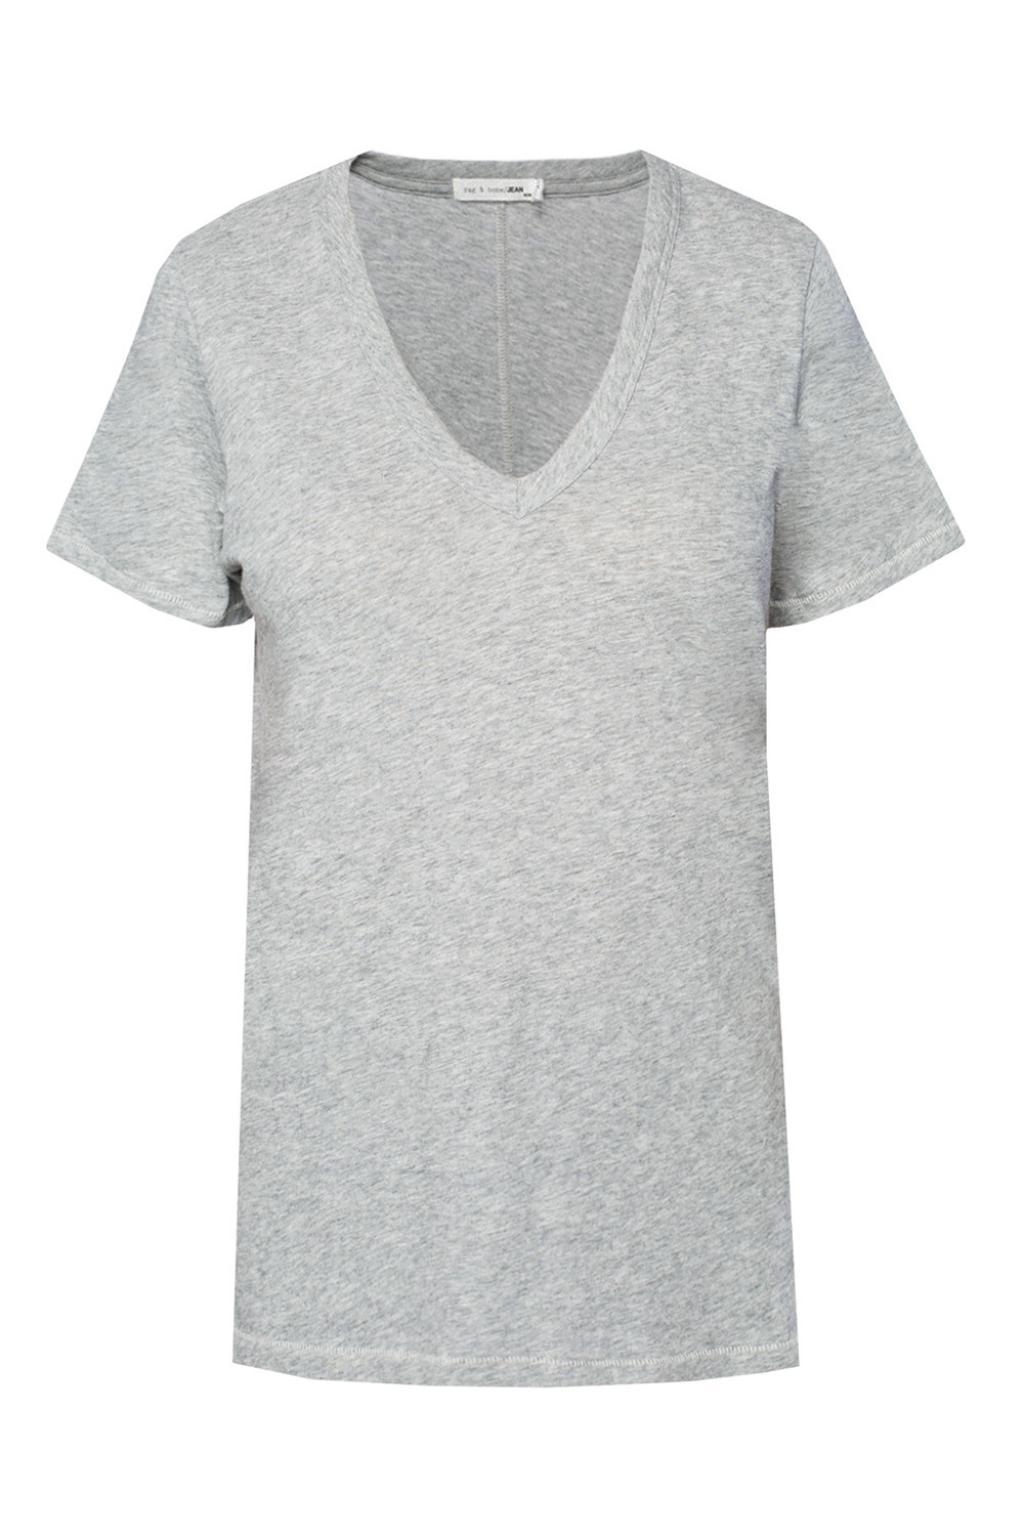 Rag & Bone Cotton V-neck T-shirt in Grey (Gray) - Save 1% - Lyst